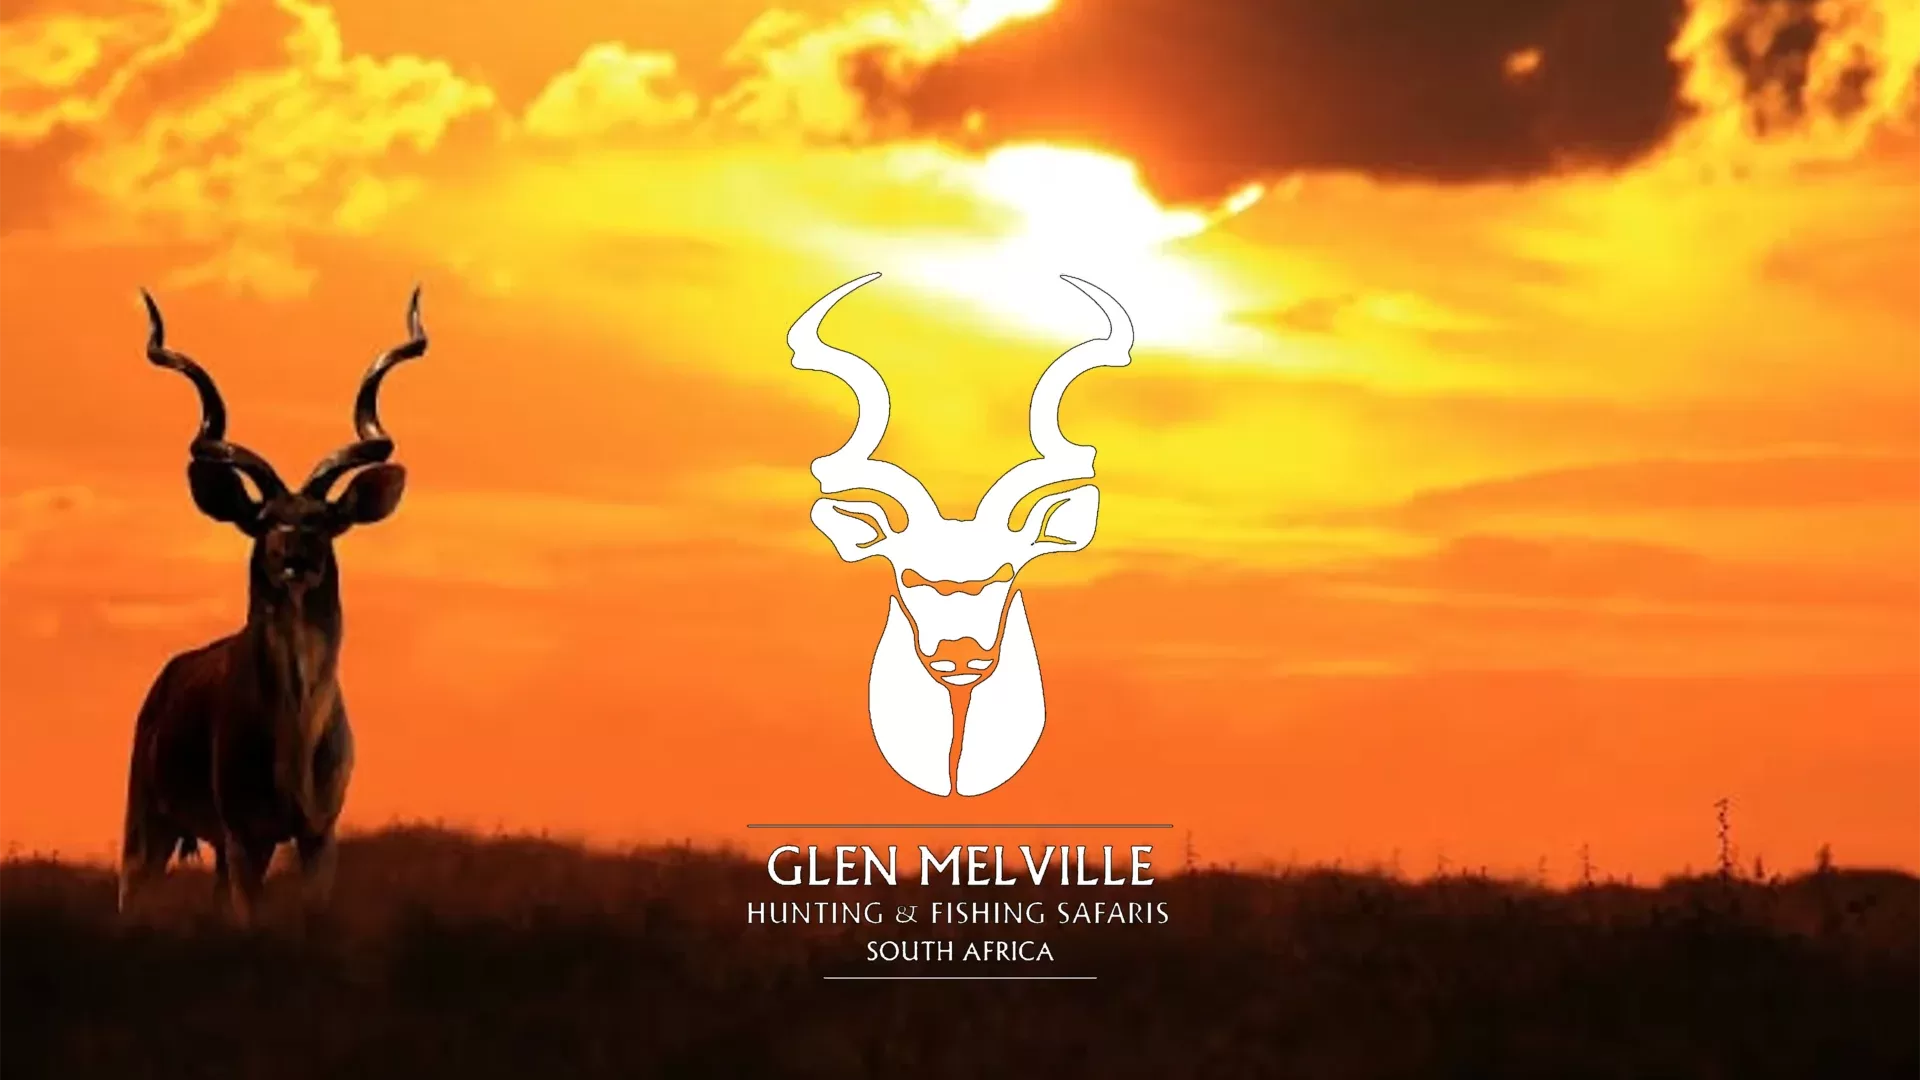 Glen Melville Hunting & Fishing Safaris